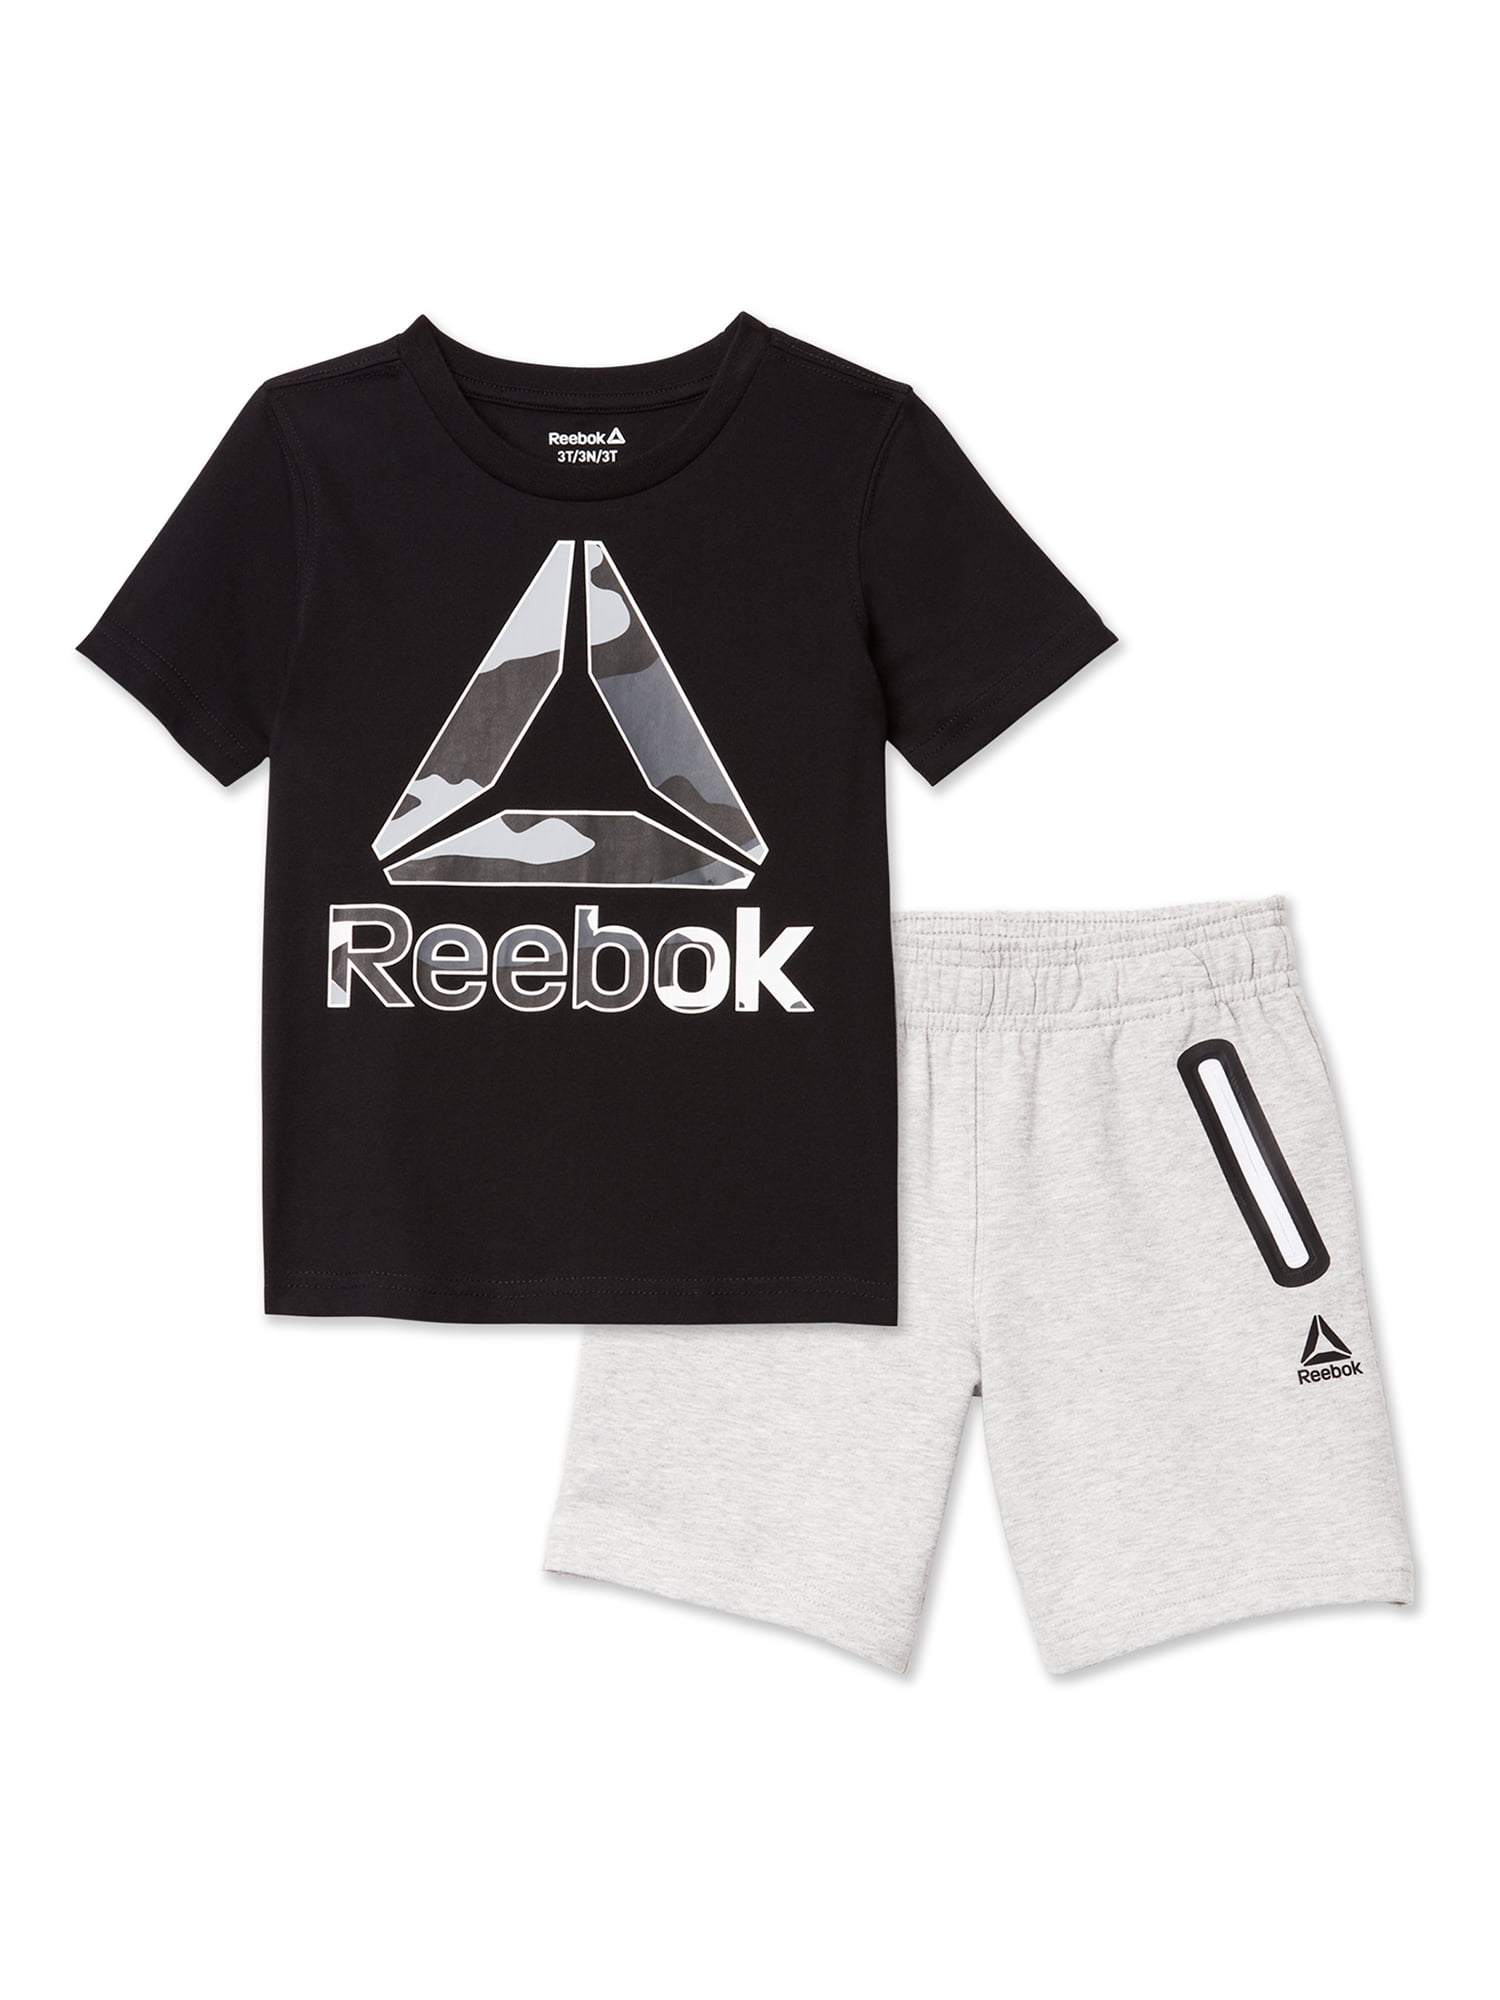 Reebok Boys Black & White 2pc Short Set Set Size 2T 3T 4T 4 5 6 7 